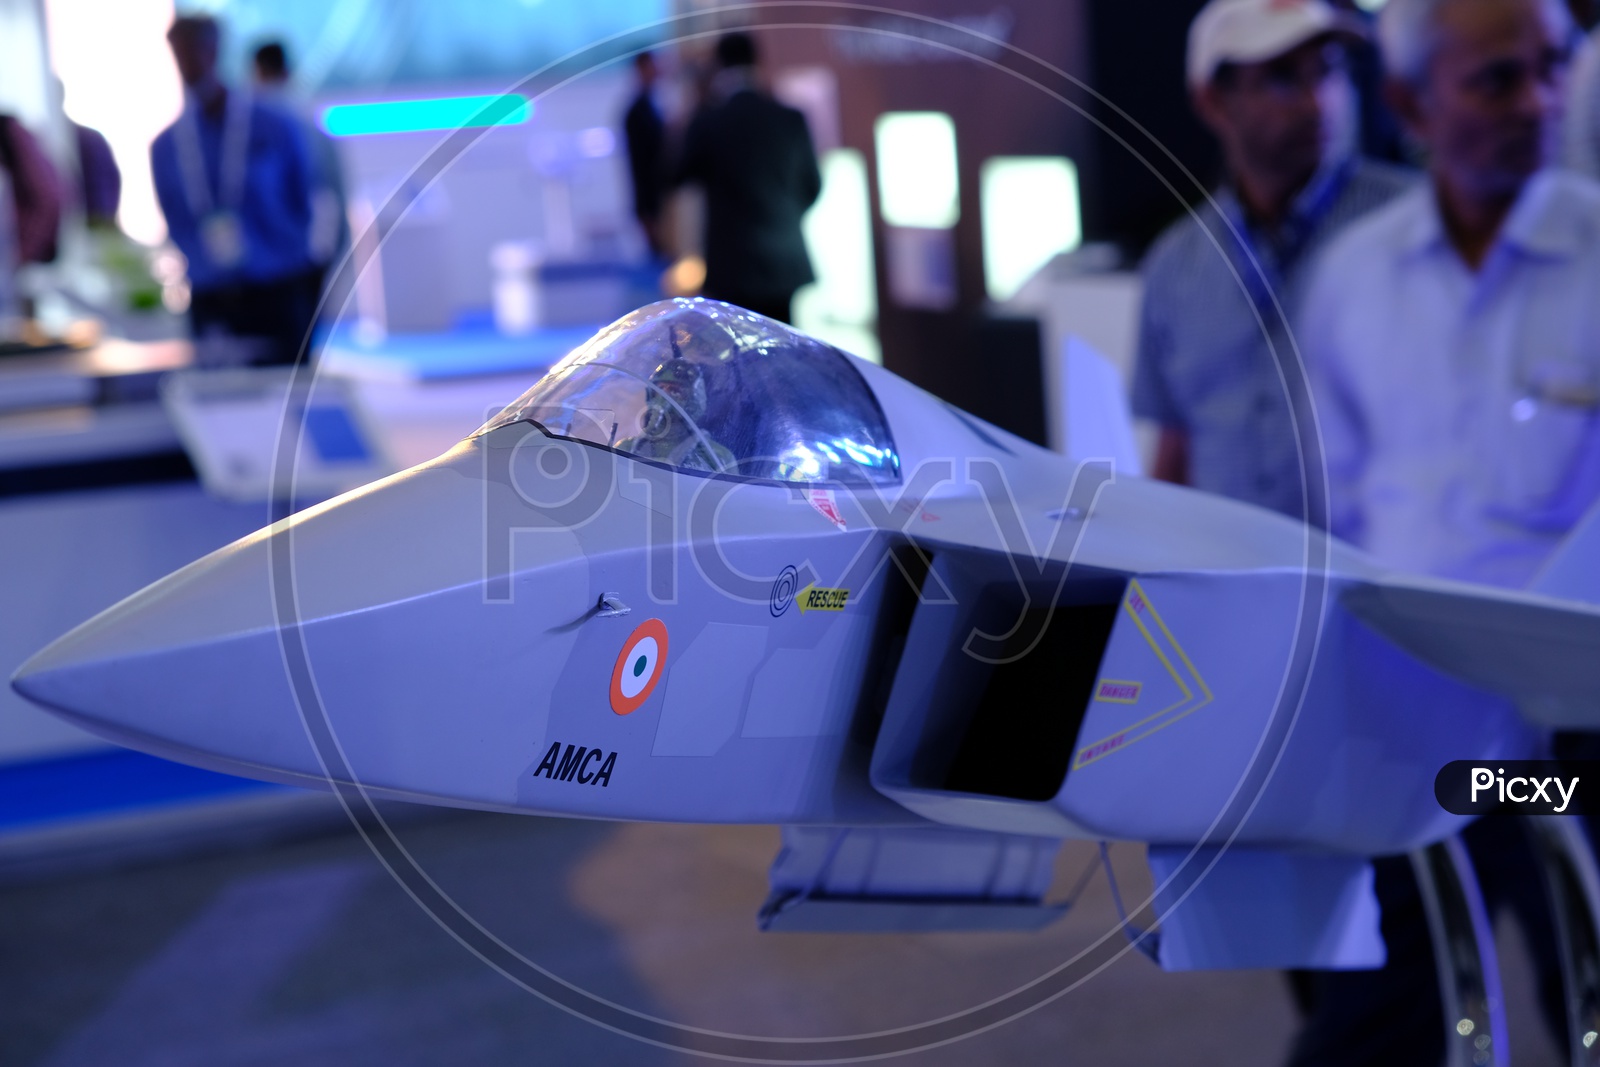 A Model of HAL Advanced Medium Combat Aircraft displayed at Aero India 2019